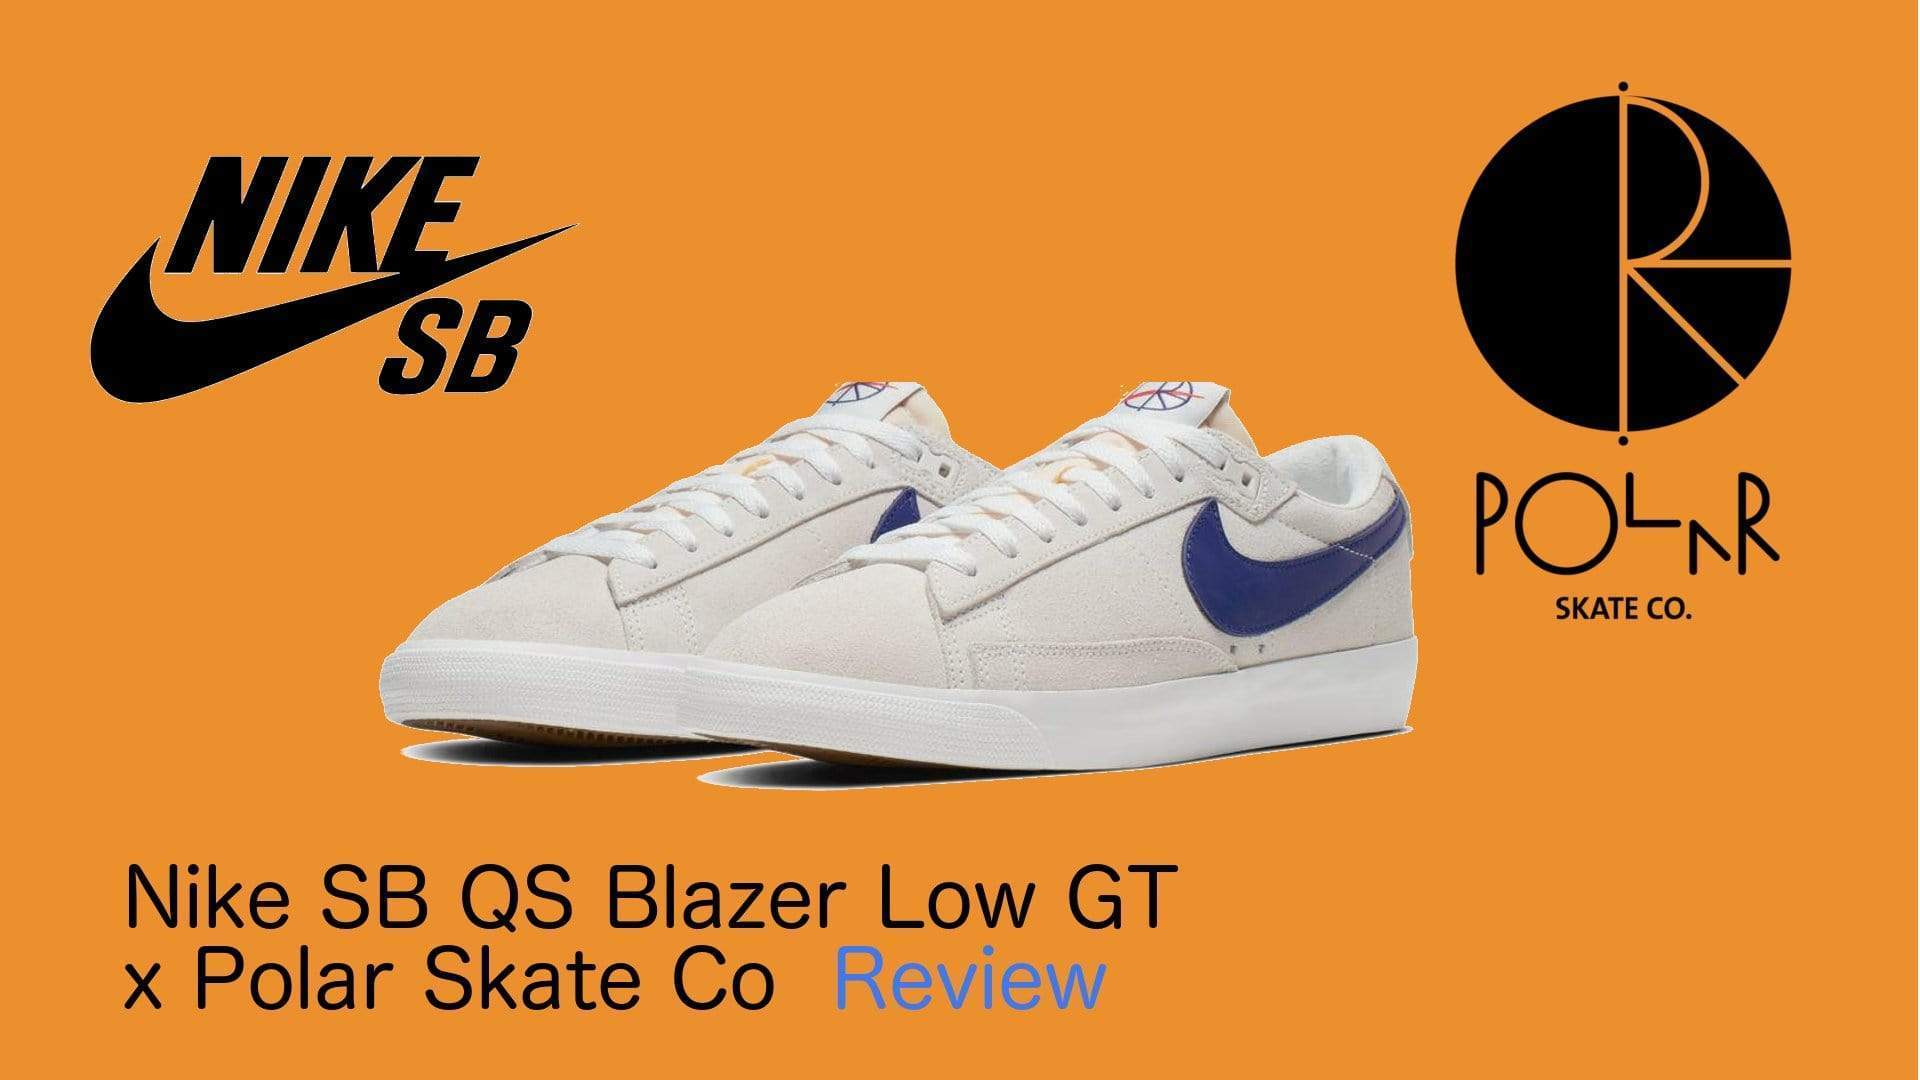 Nike SB QS x Polar Skate Co. Blazer Low GT - Release Date: 10 June 2019 AEST